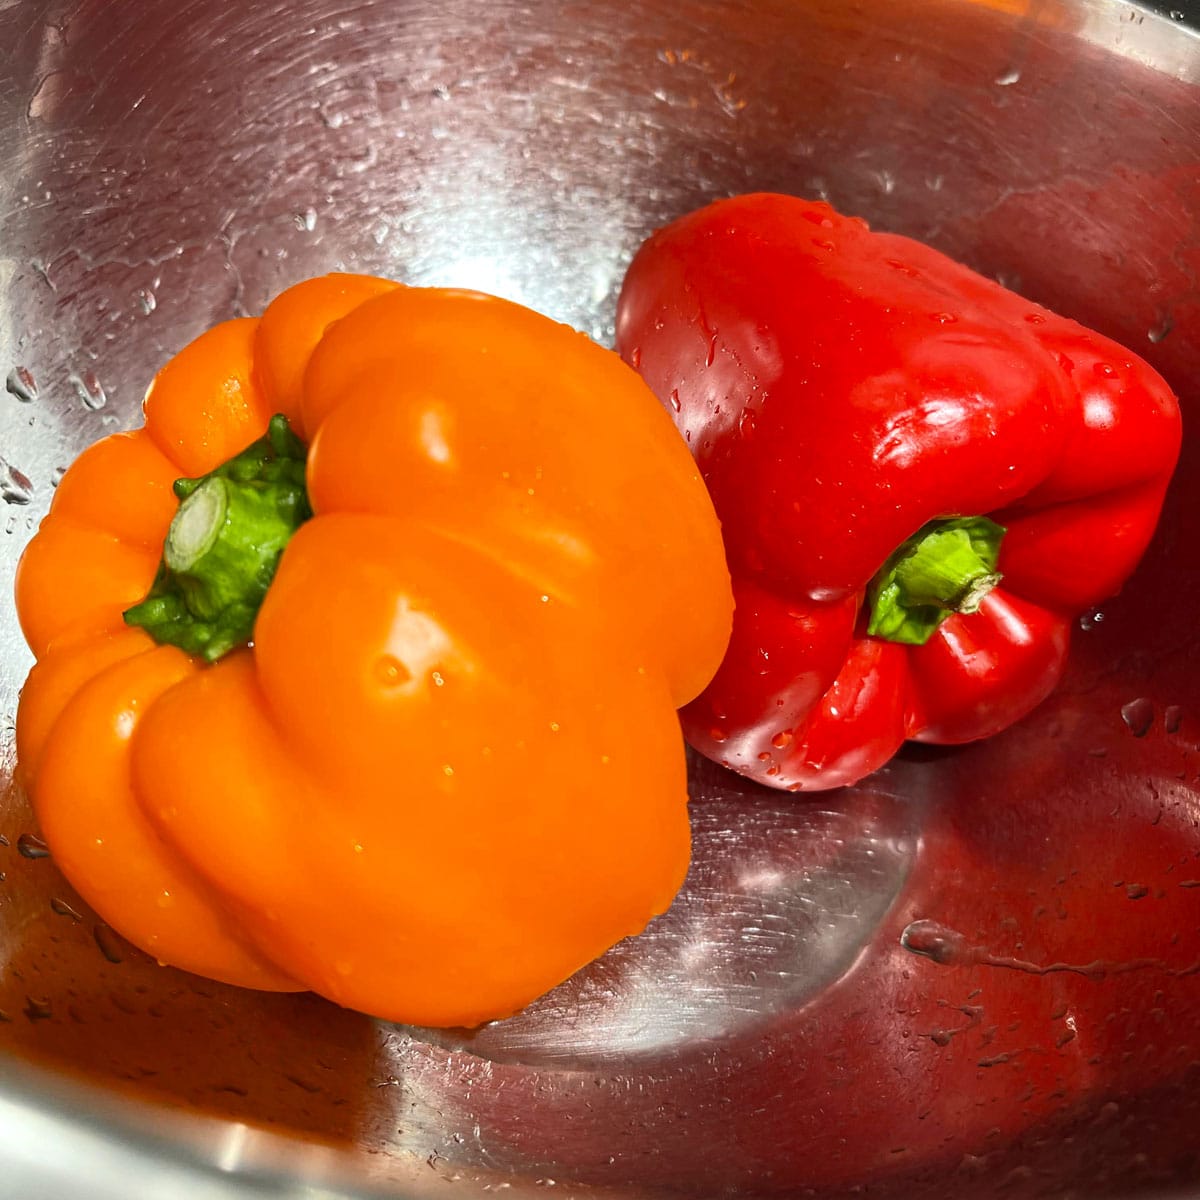 red bell pepper and orange bell pepper